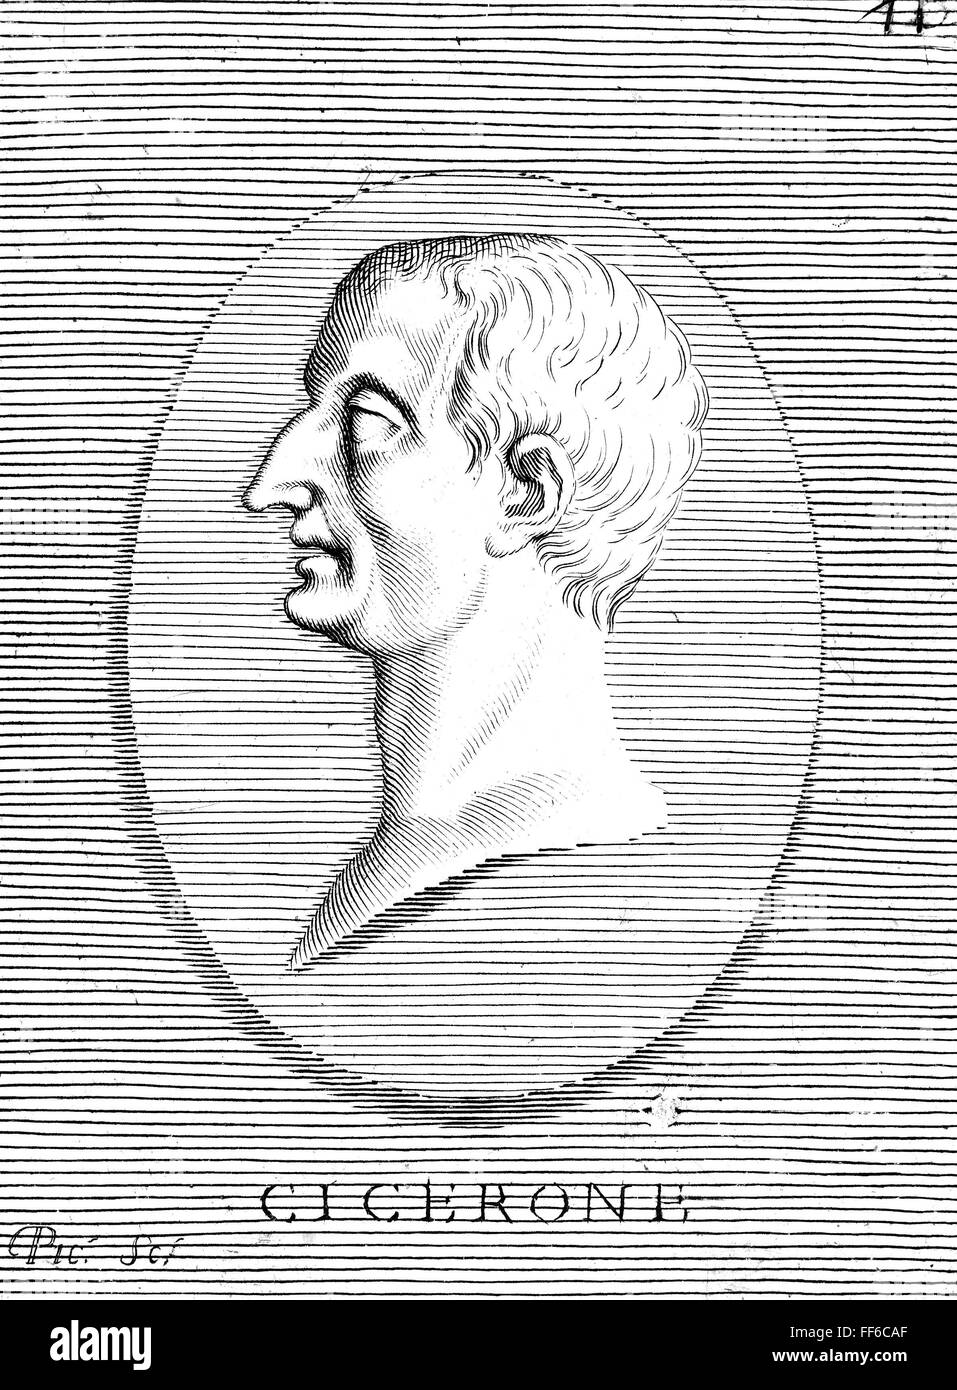 MARCUS TULLIUS CICERO /n(106-43 B.C.). Roman orator, statesman, and philosopher. Line engraving, 18th century. Stock Photo